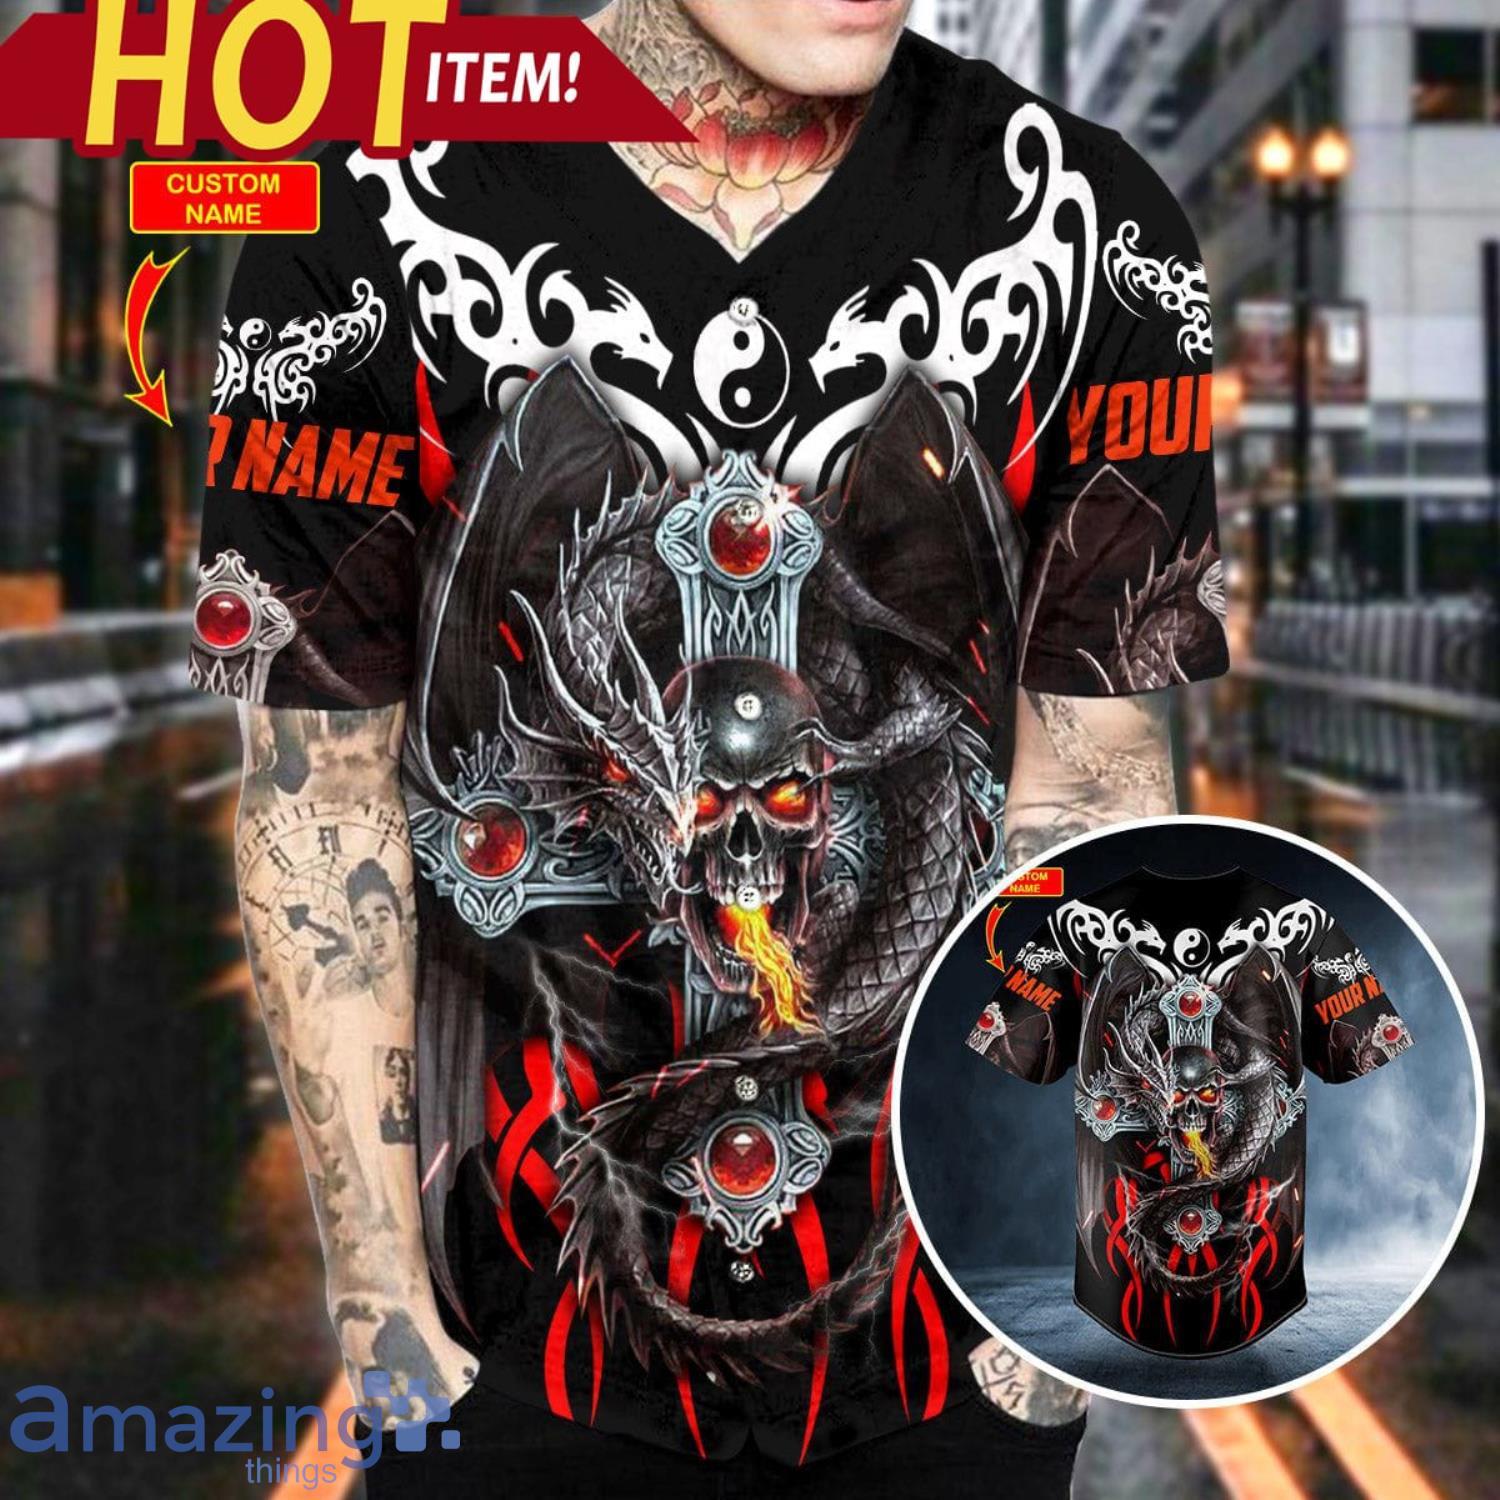 Blast Dragon Fire Skull Custom Name All Over Print Baseball Jersey Shirt -  Banantees